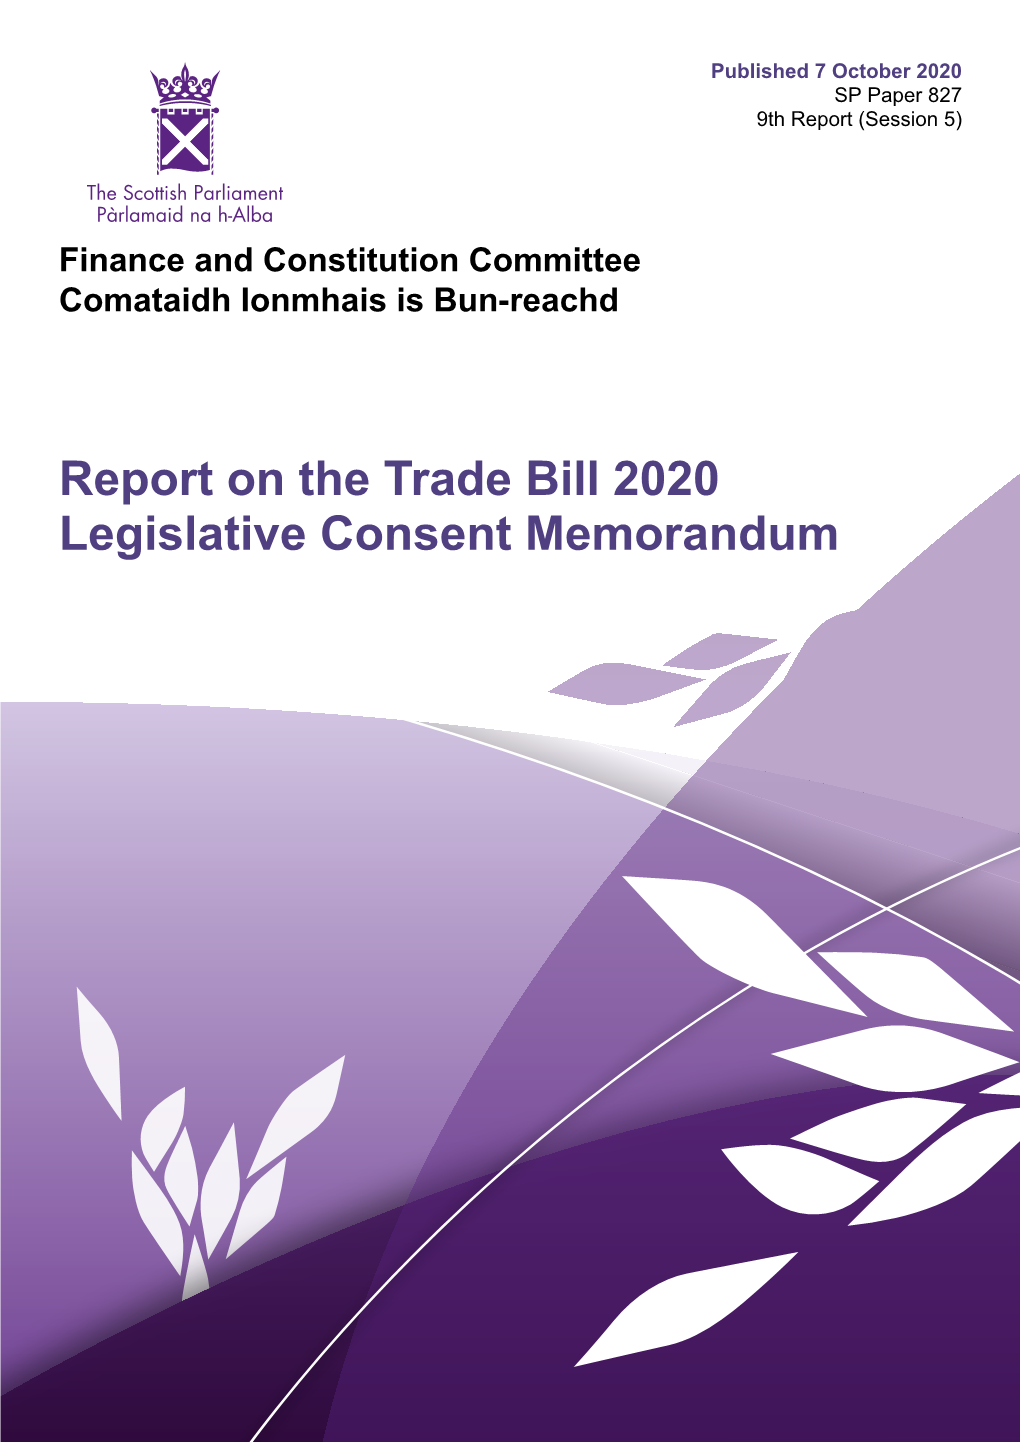 Committee Report on the Trade Bill 2020 Legislative Consent Memorandum, 9Th Report (Session 5)